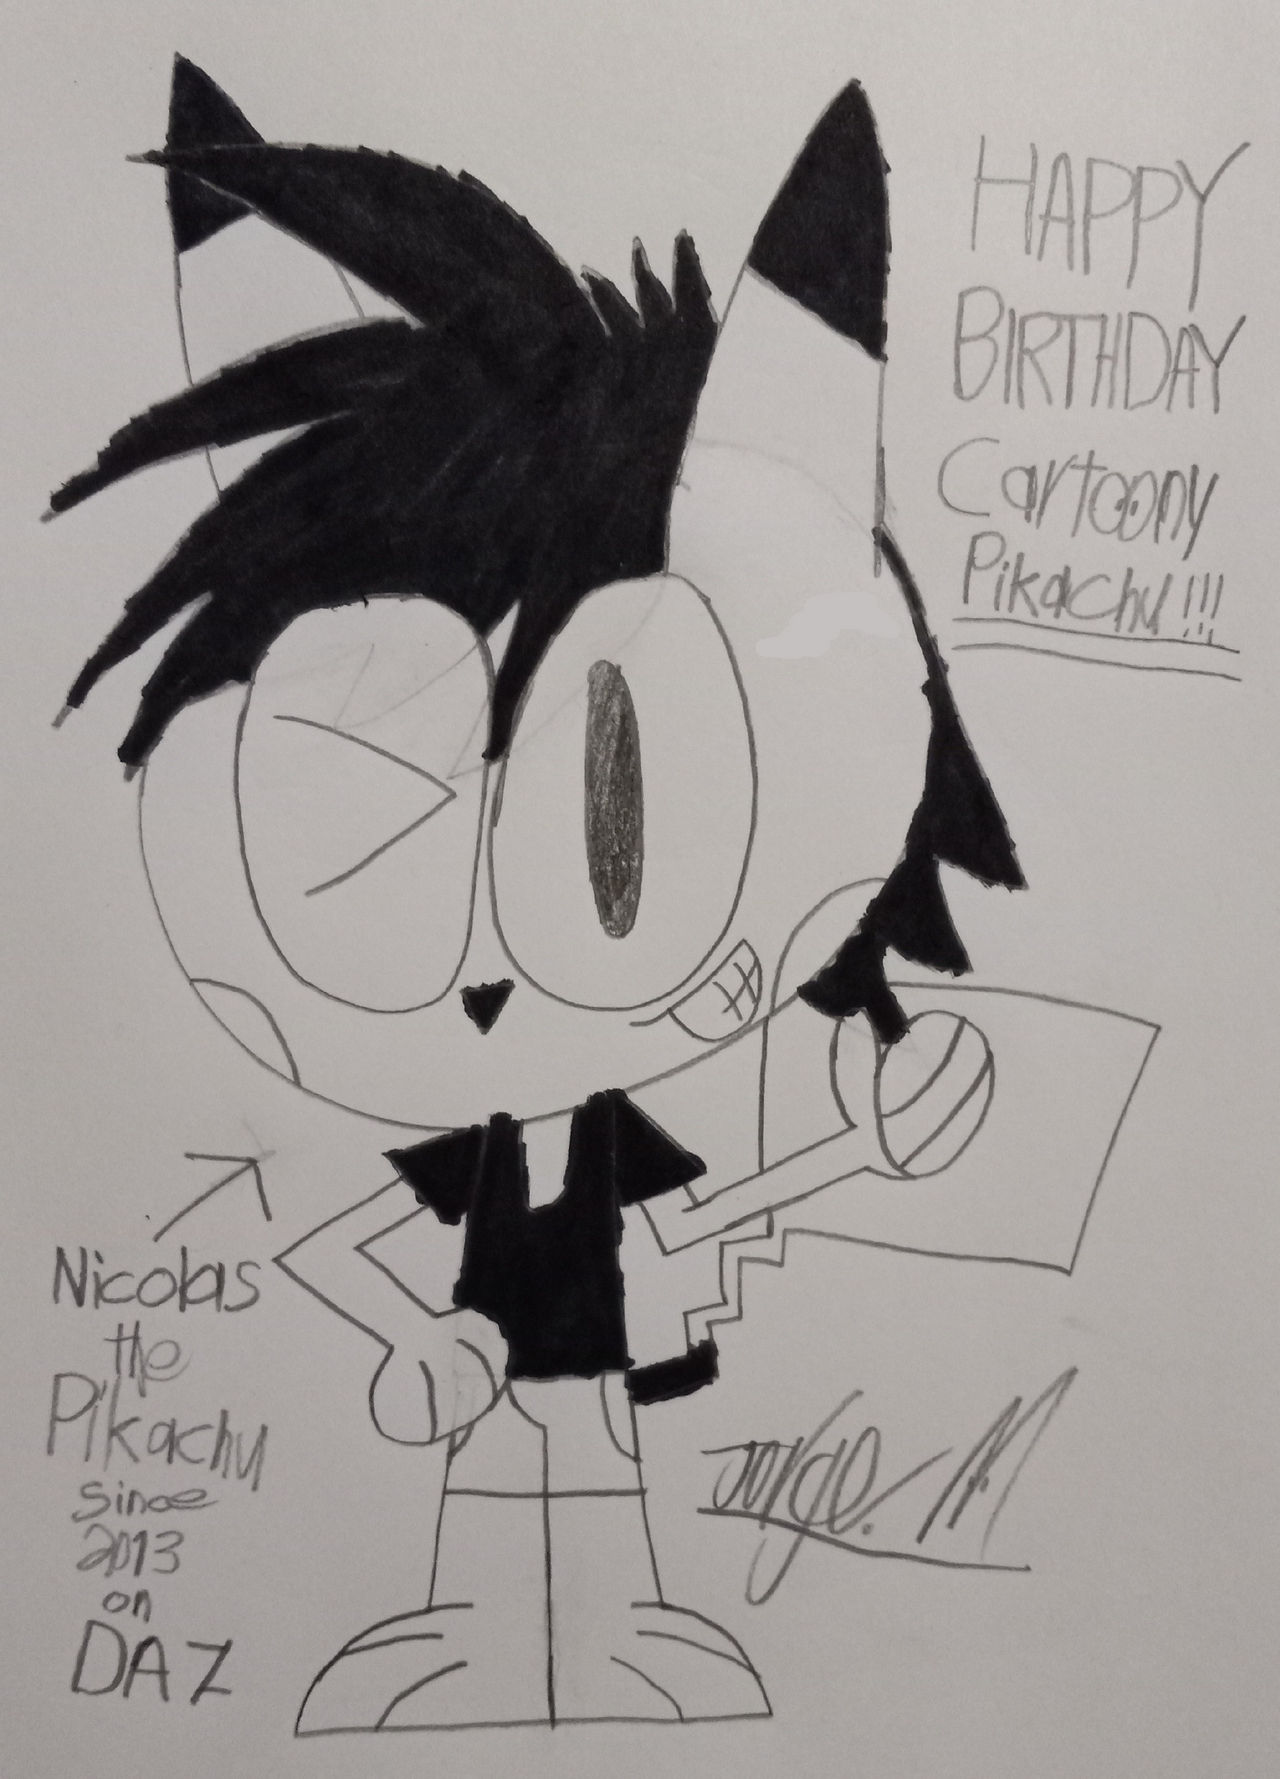 Happy Birthday CartoonyPikachu (Gift)